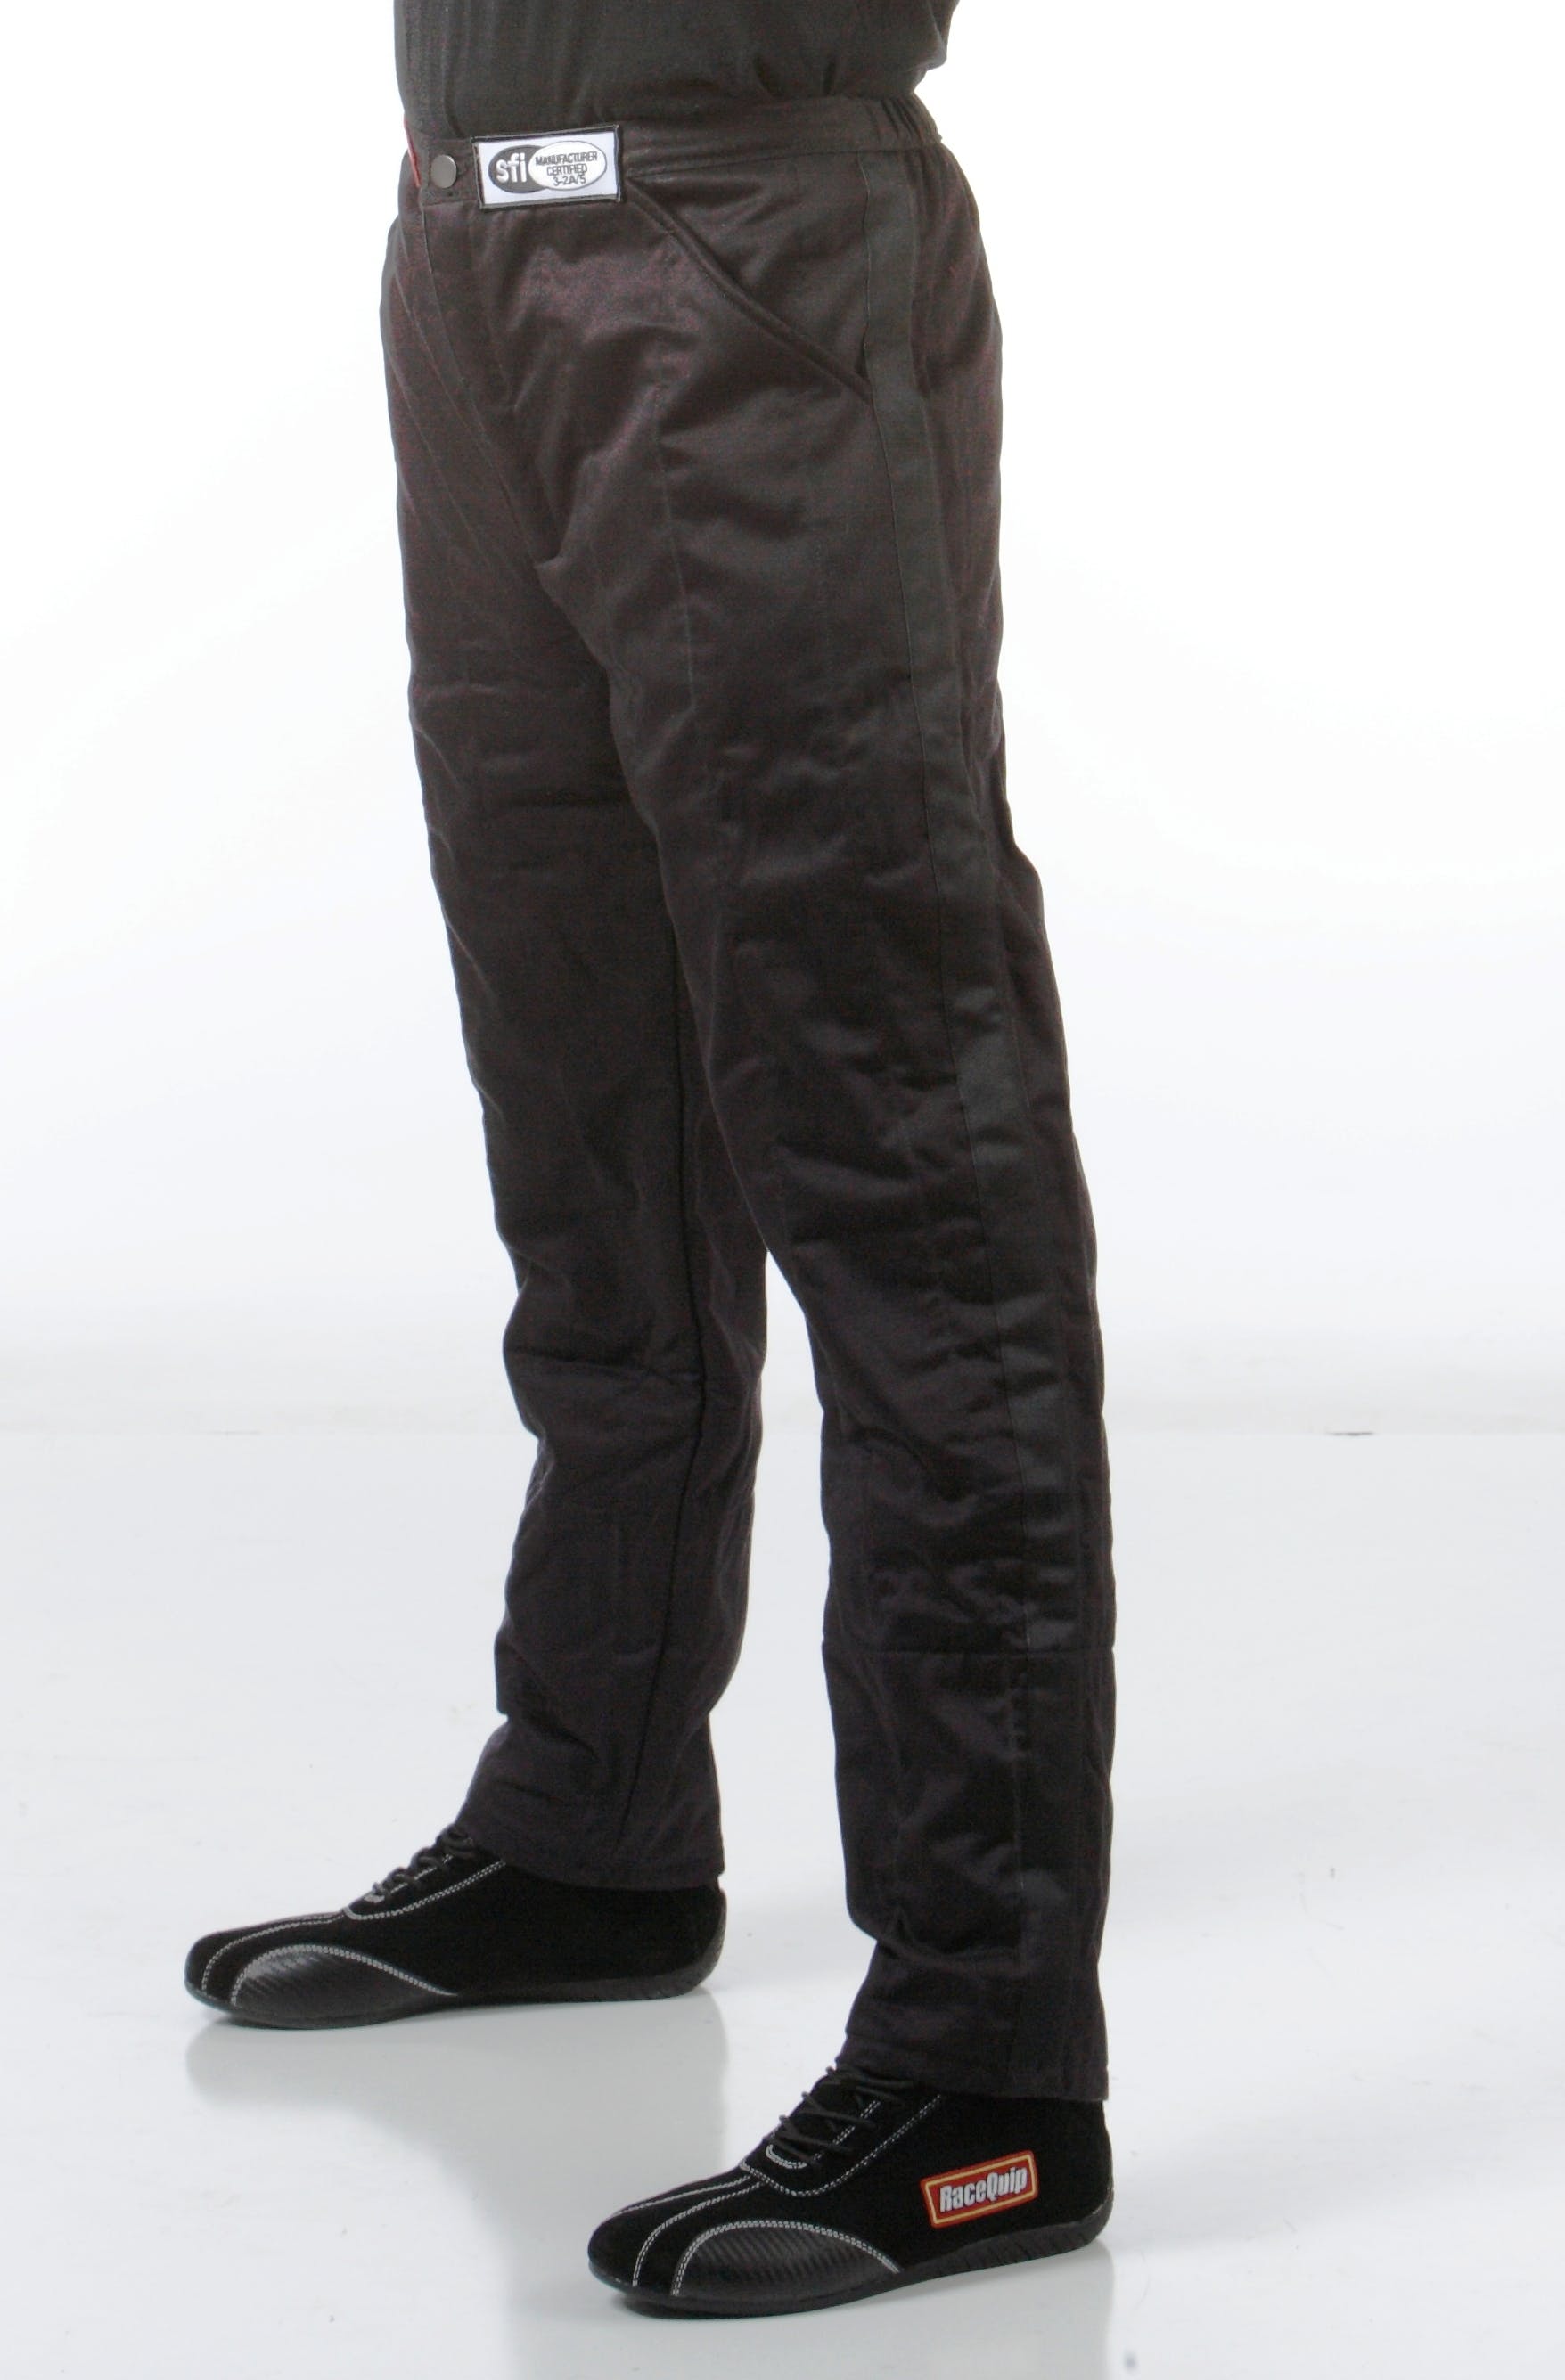 RaceQuip 122009 SFI-5 Pyrovatex Multi-Layer Racing Fire Pants (Black, 4X-Large)